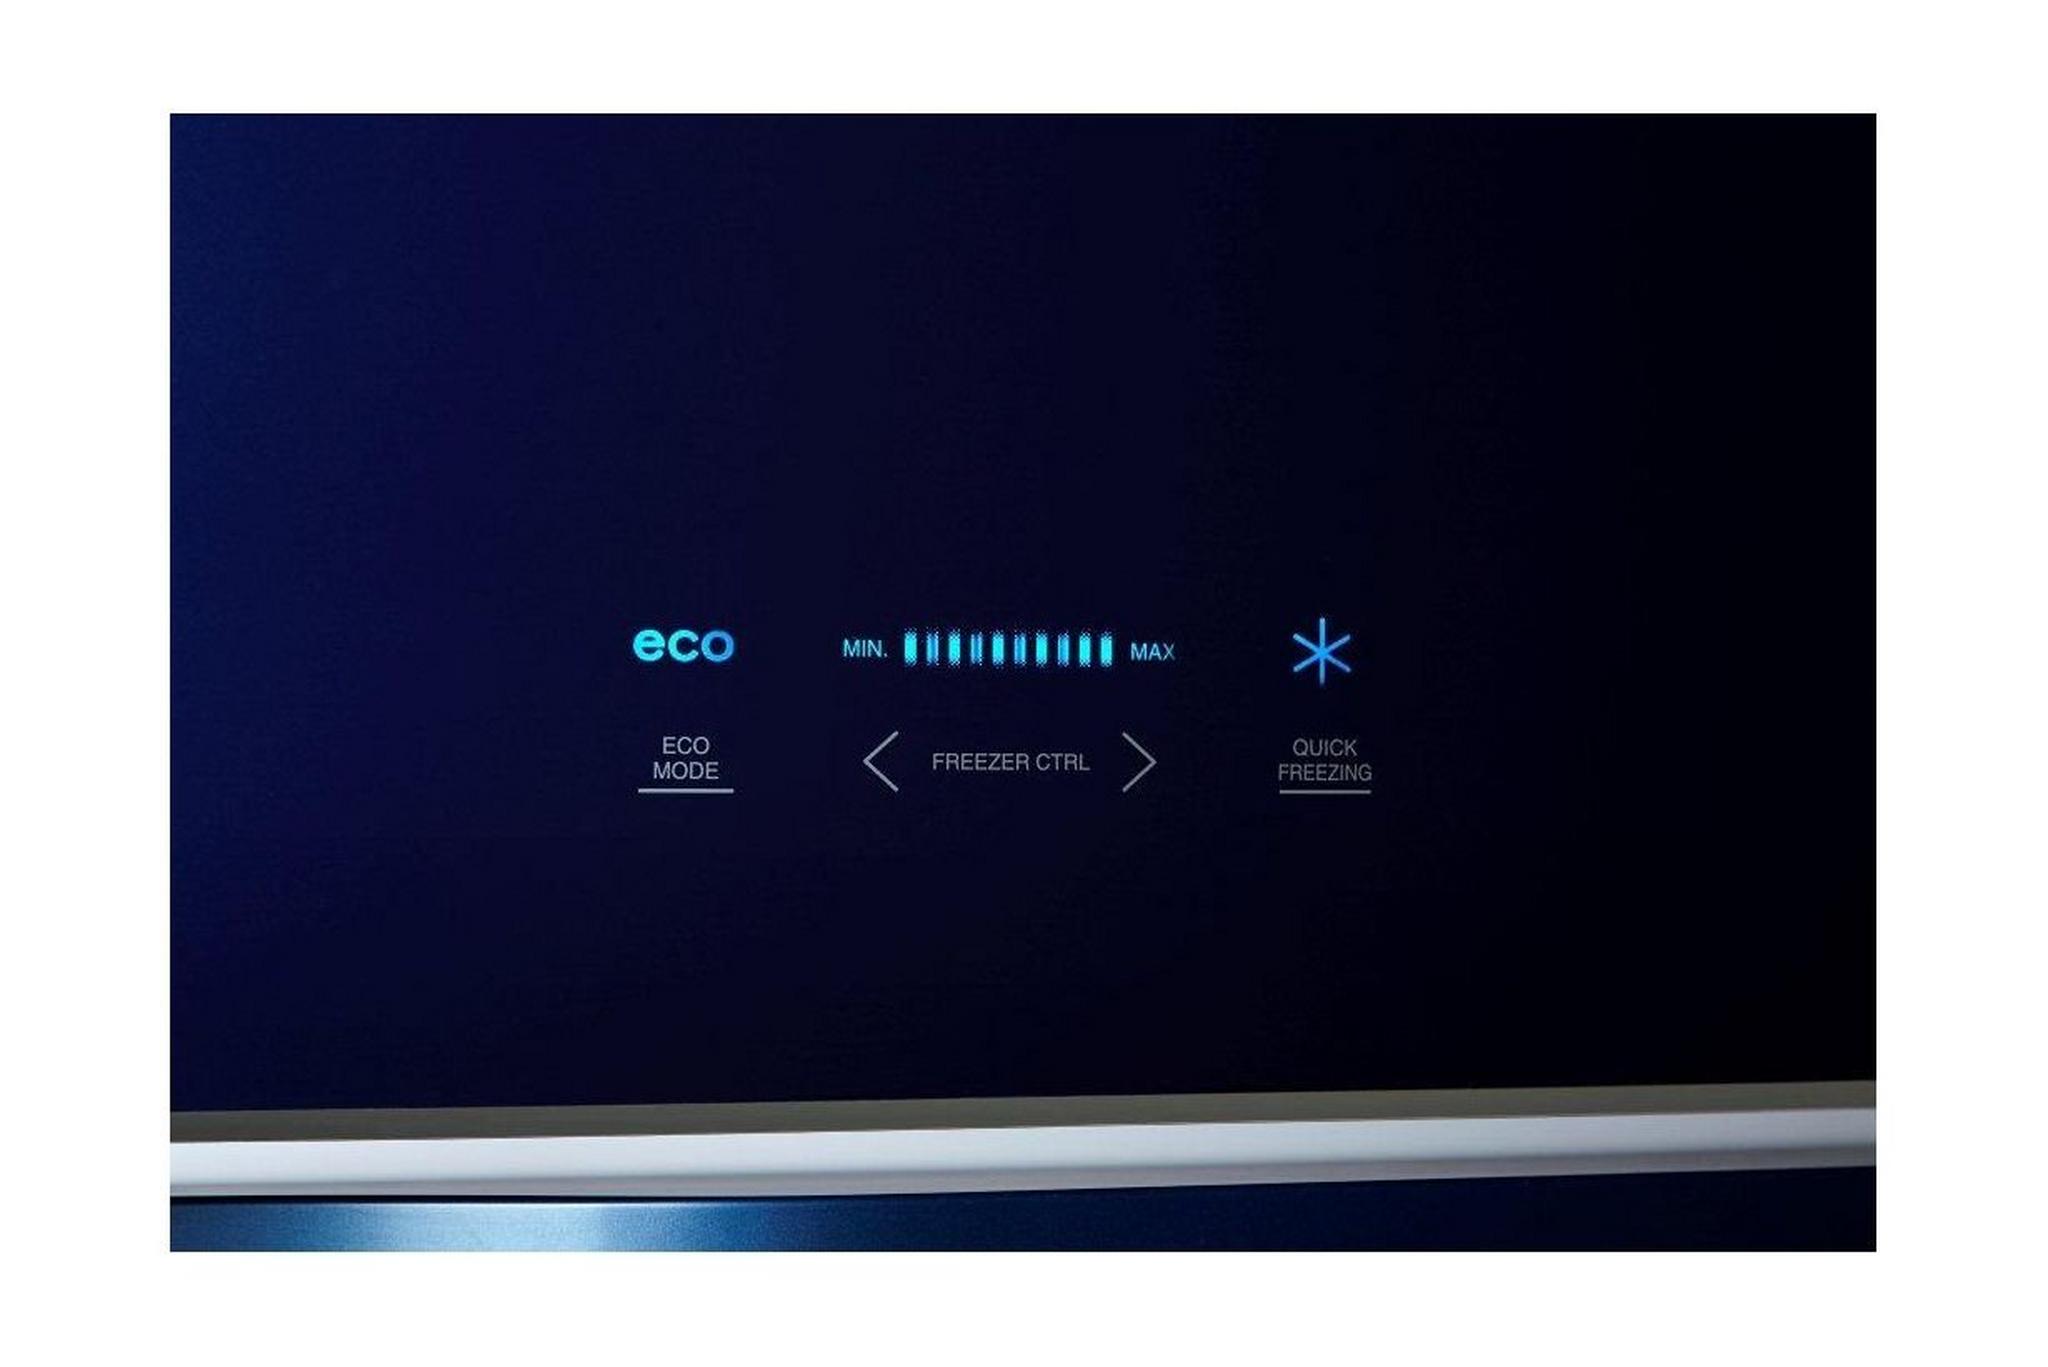 Toshiba 20 CFT Top Mount Refrigerator (GR-WG69ATEZ(GG) - Blue